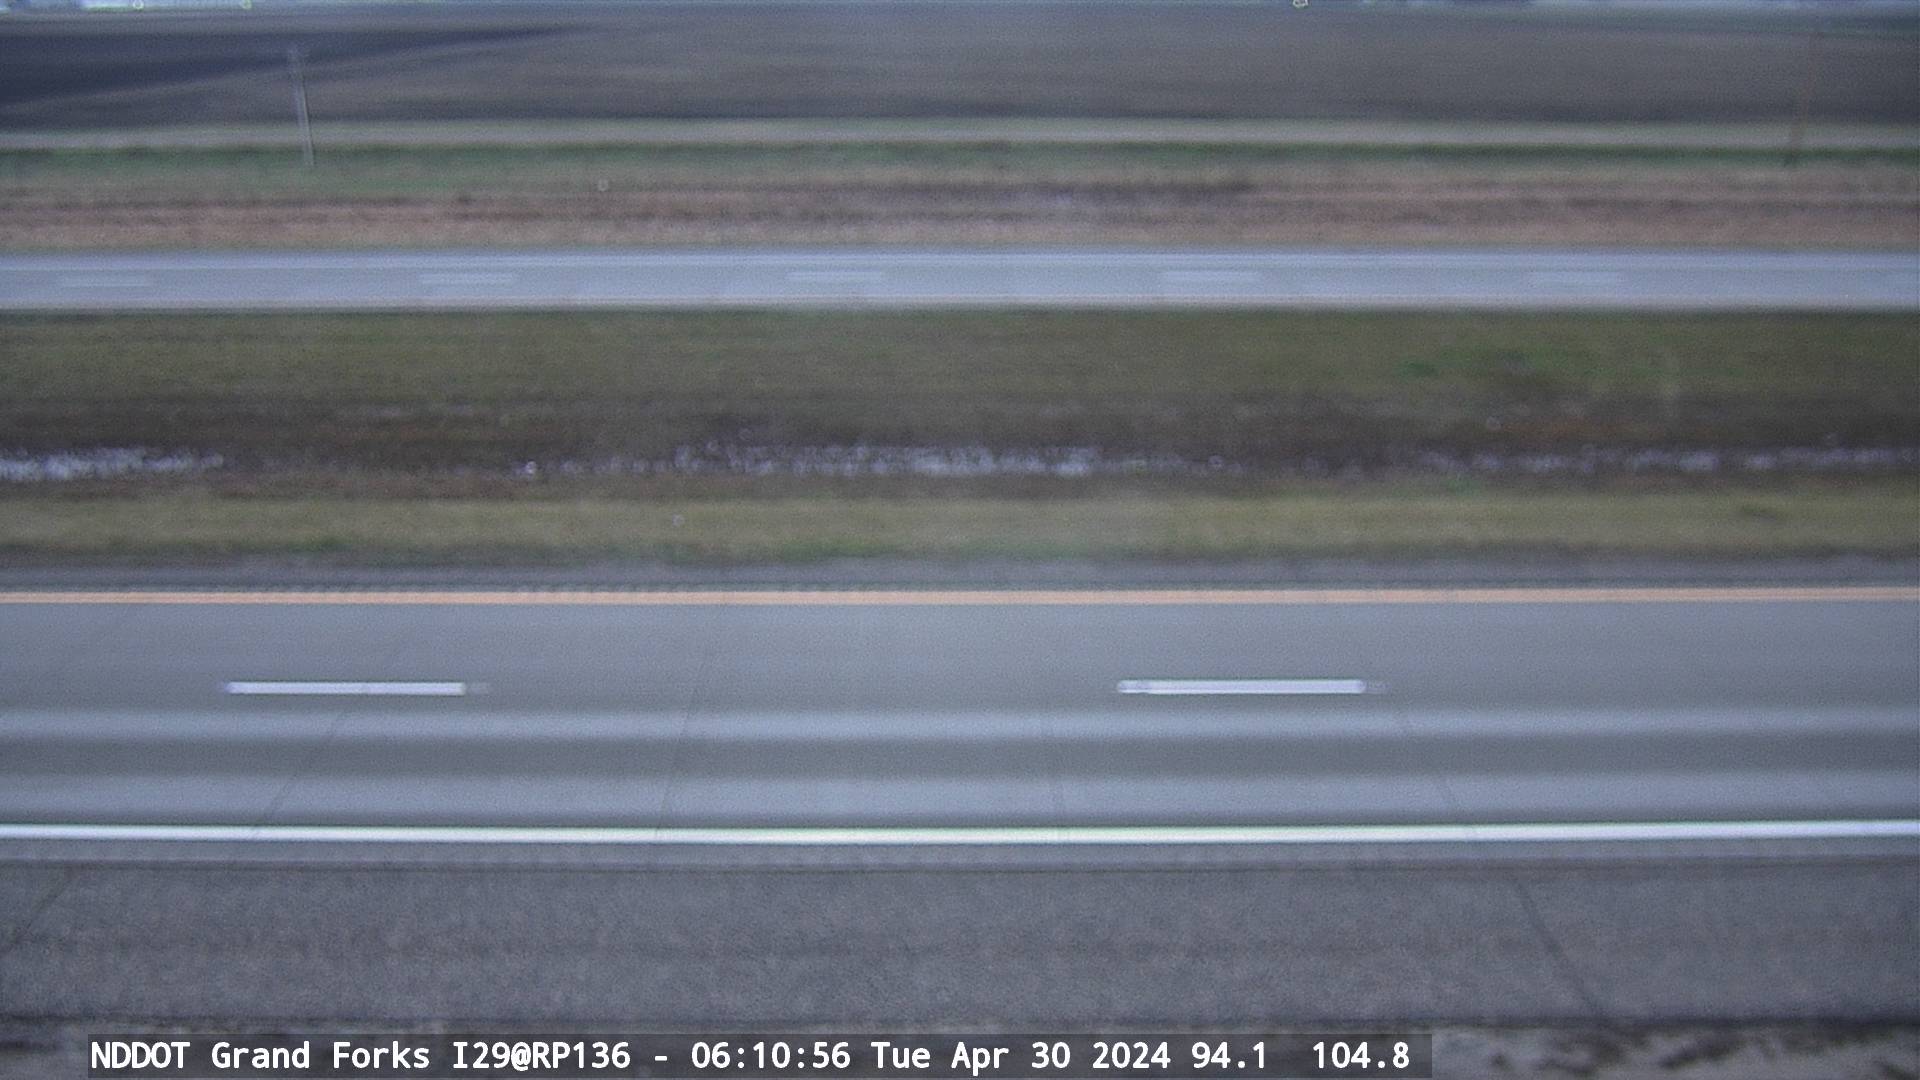 I-29 N (MP: 135.900) Grand Forks North Bound - West Traffic Camera